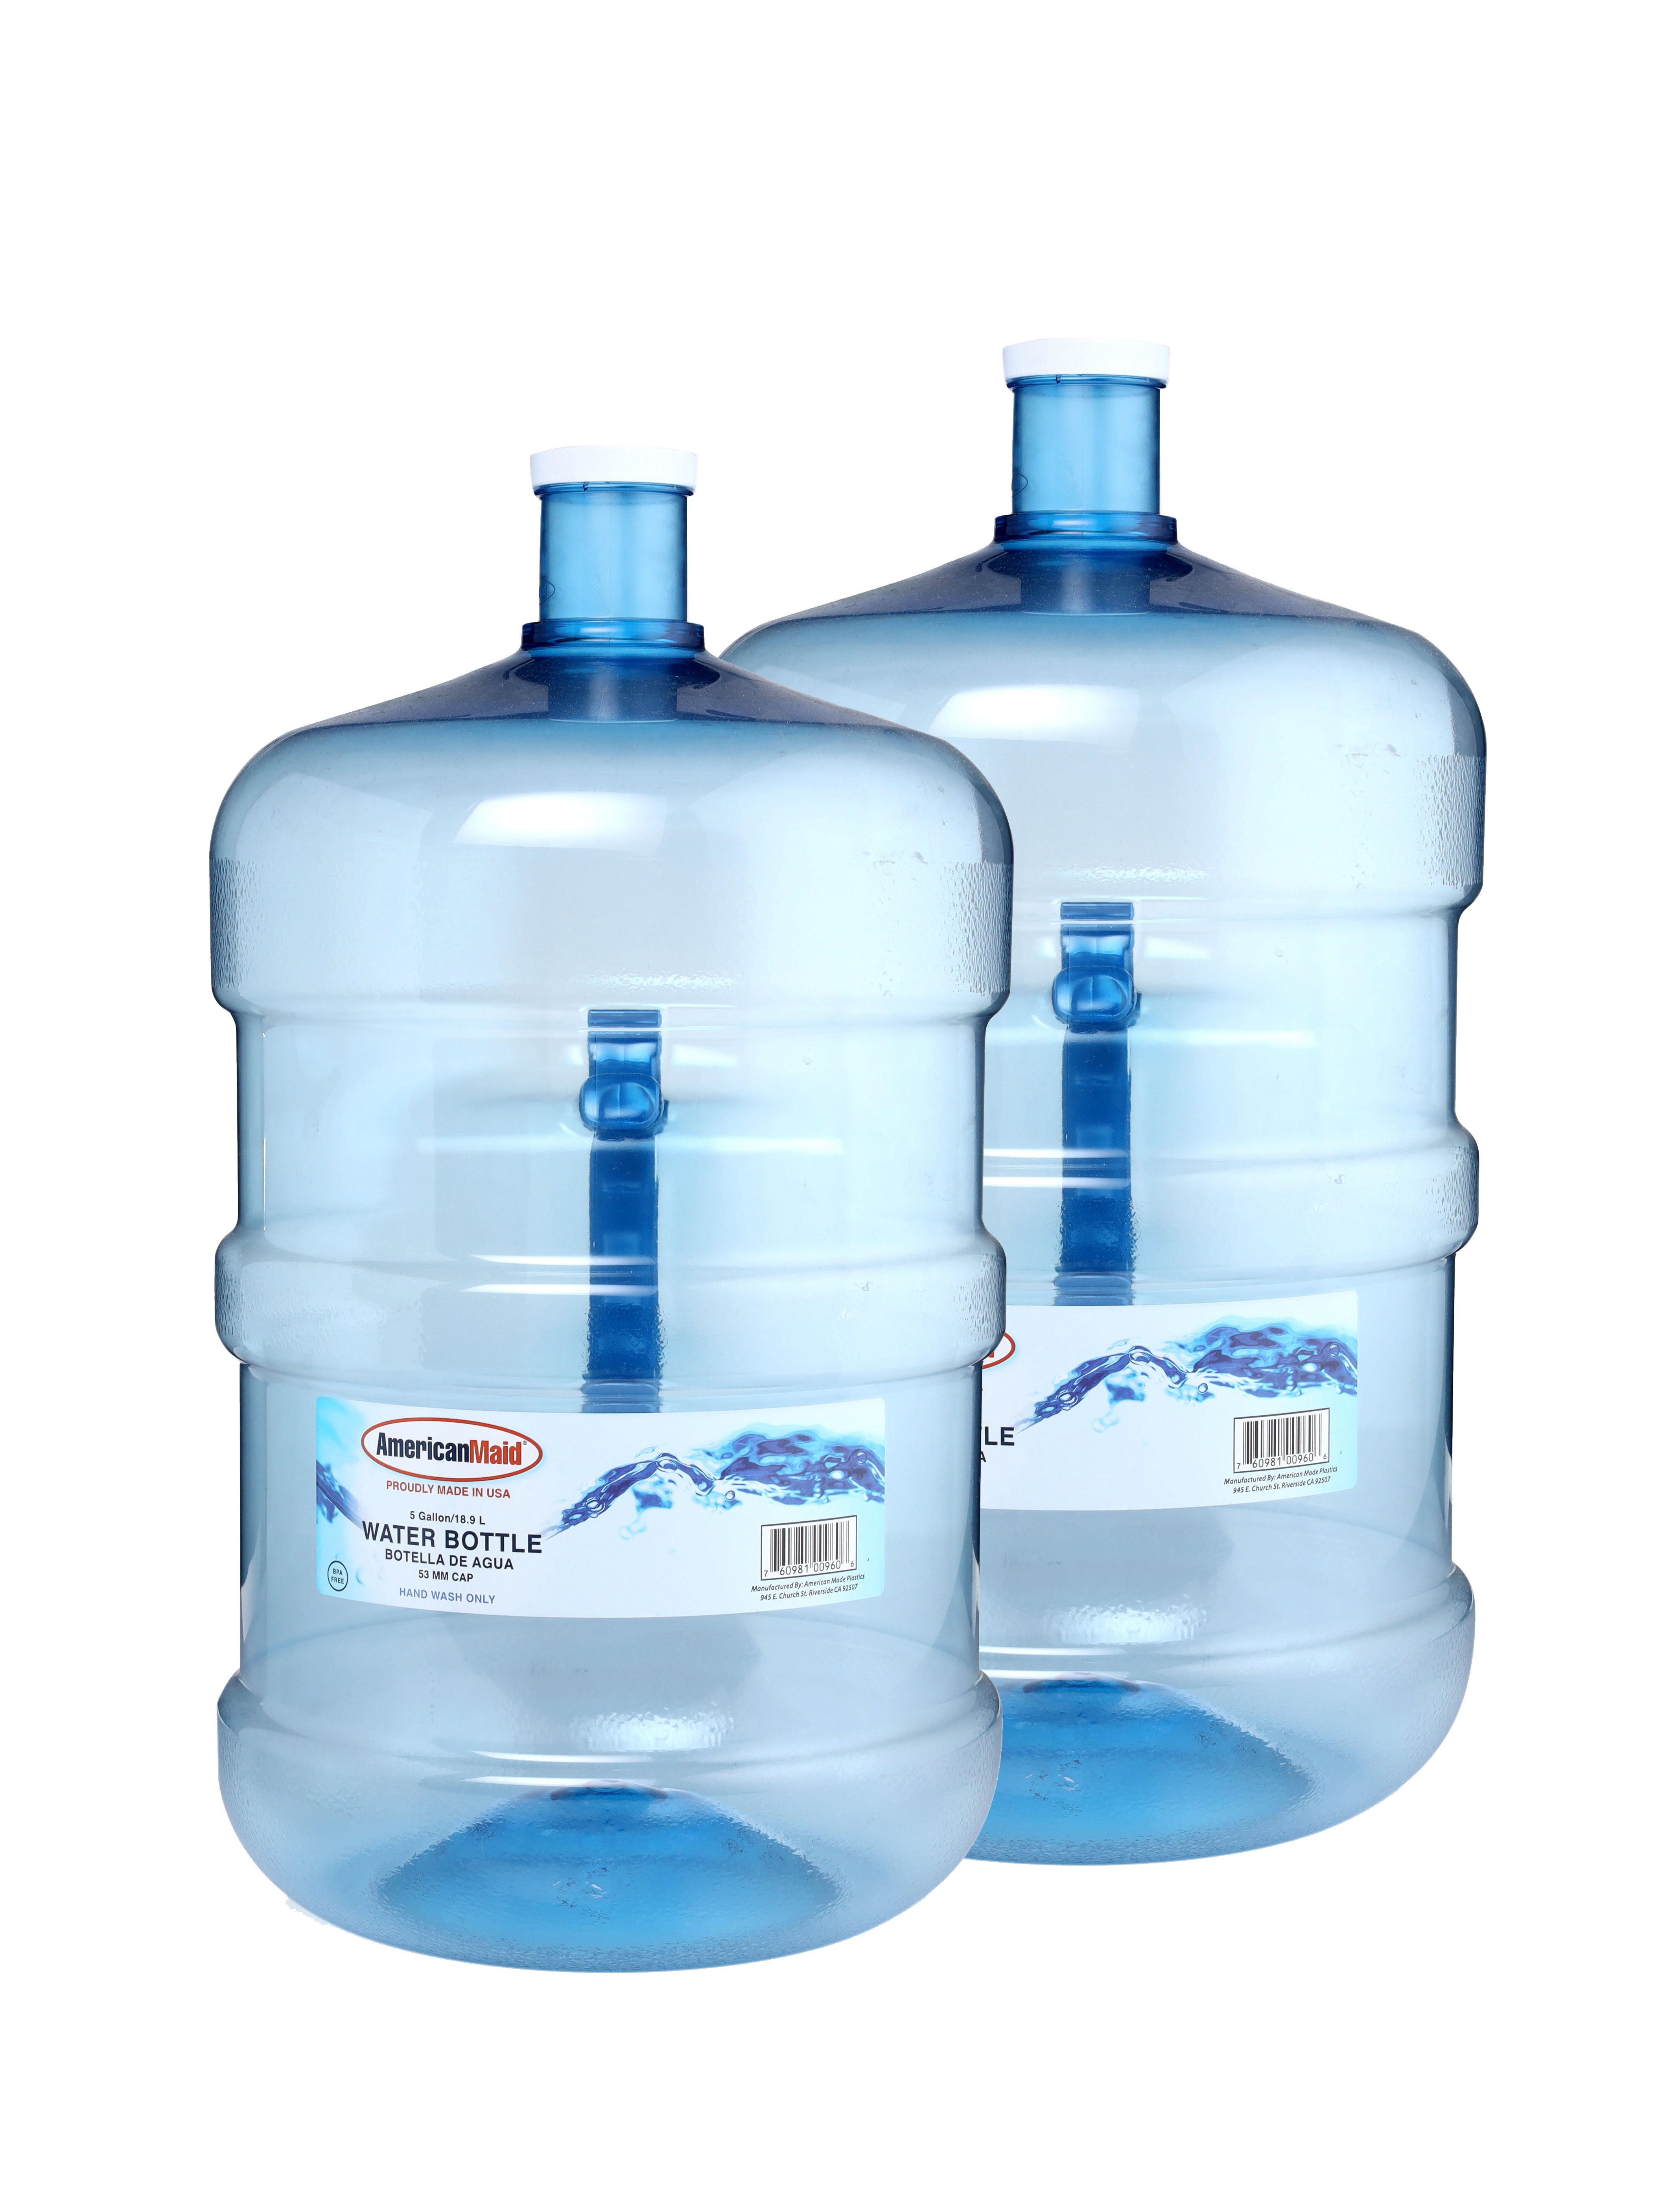 American Maid 5 Gallon Water Bottle